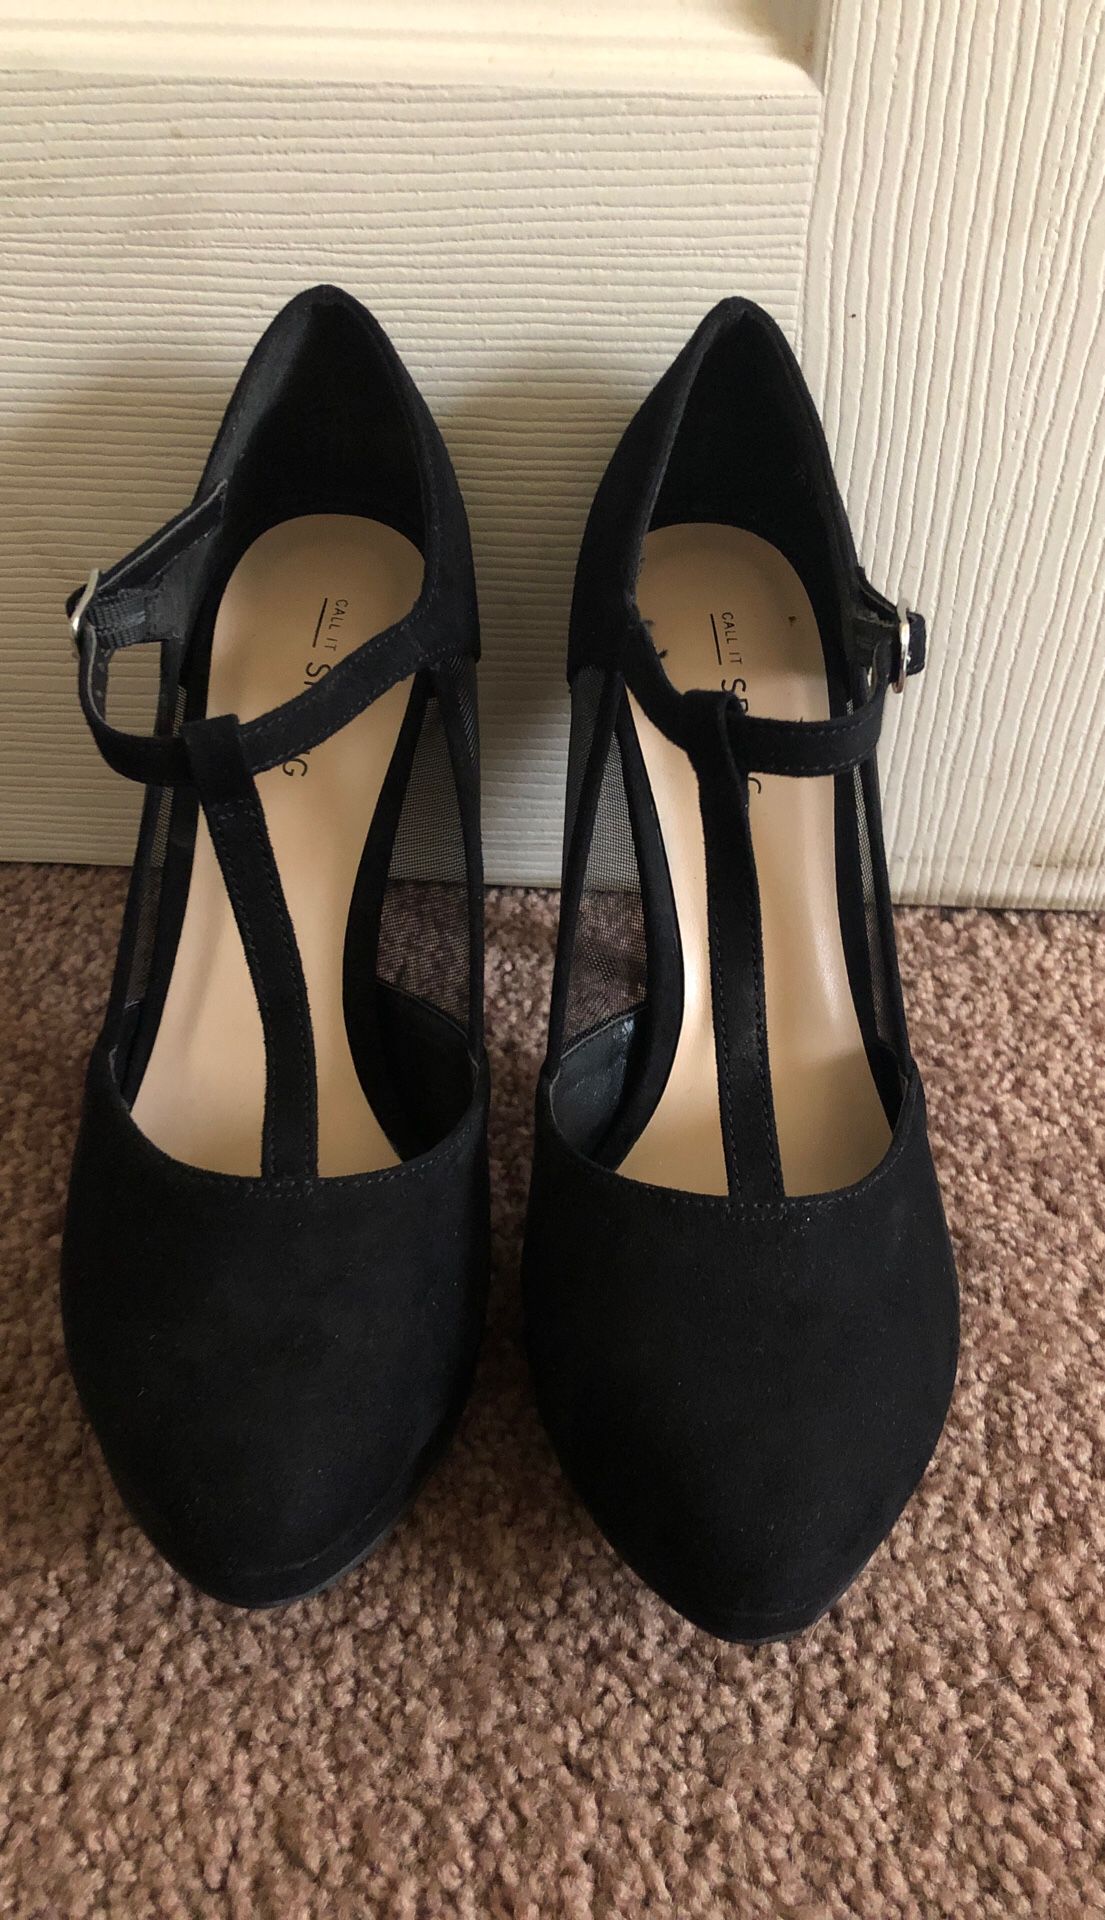 Black heels 7 1/2